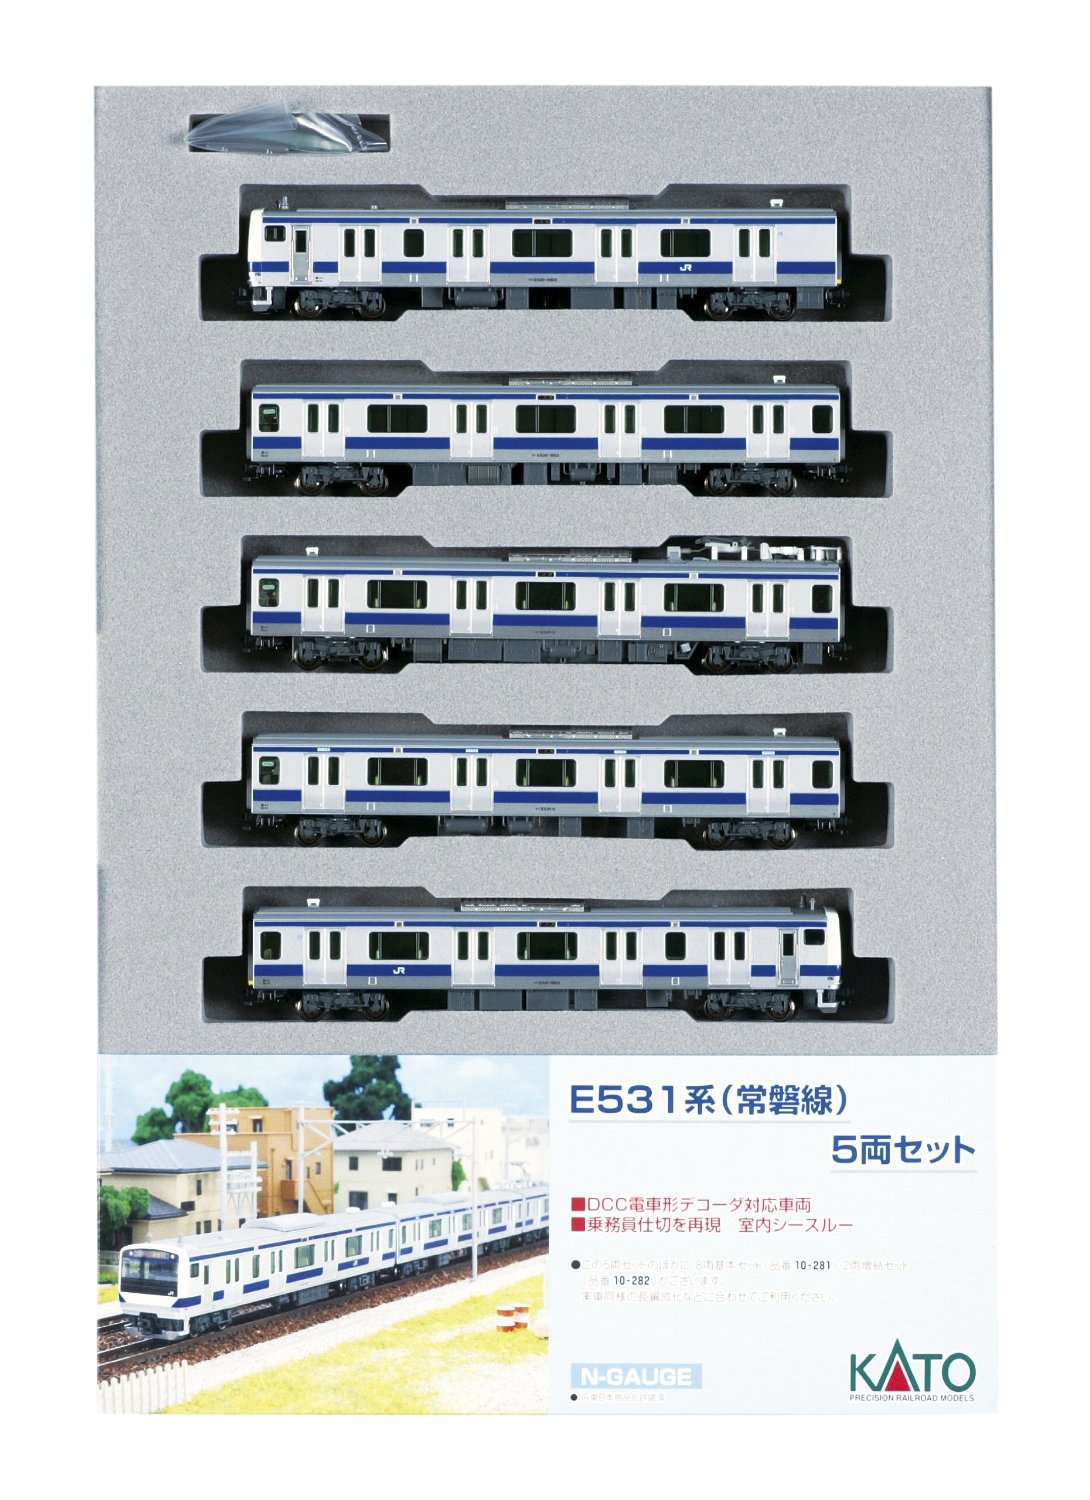 10-283 Series E531 Joban Line Suburban Ac/Dc 5 Car Set